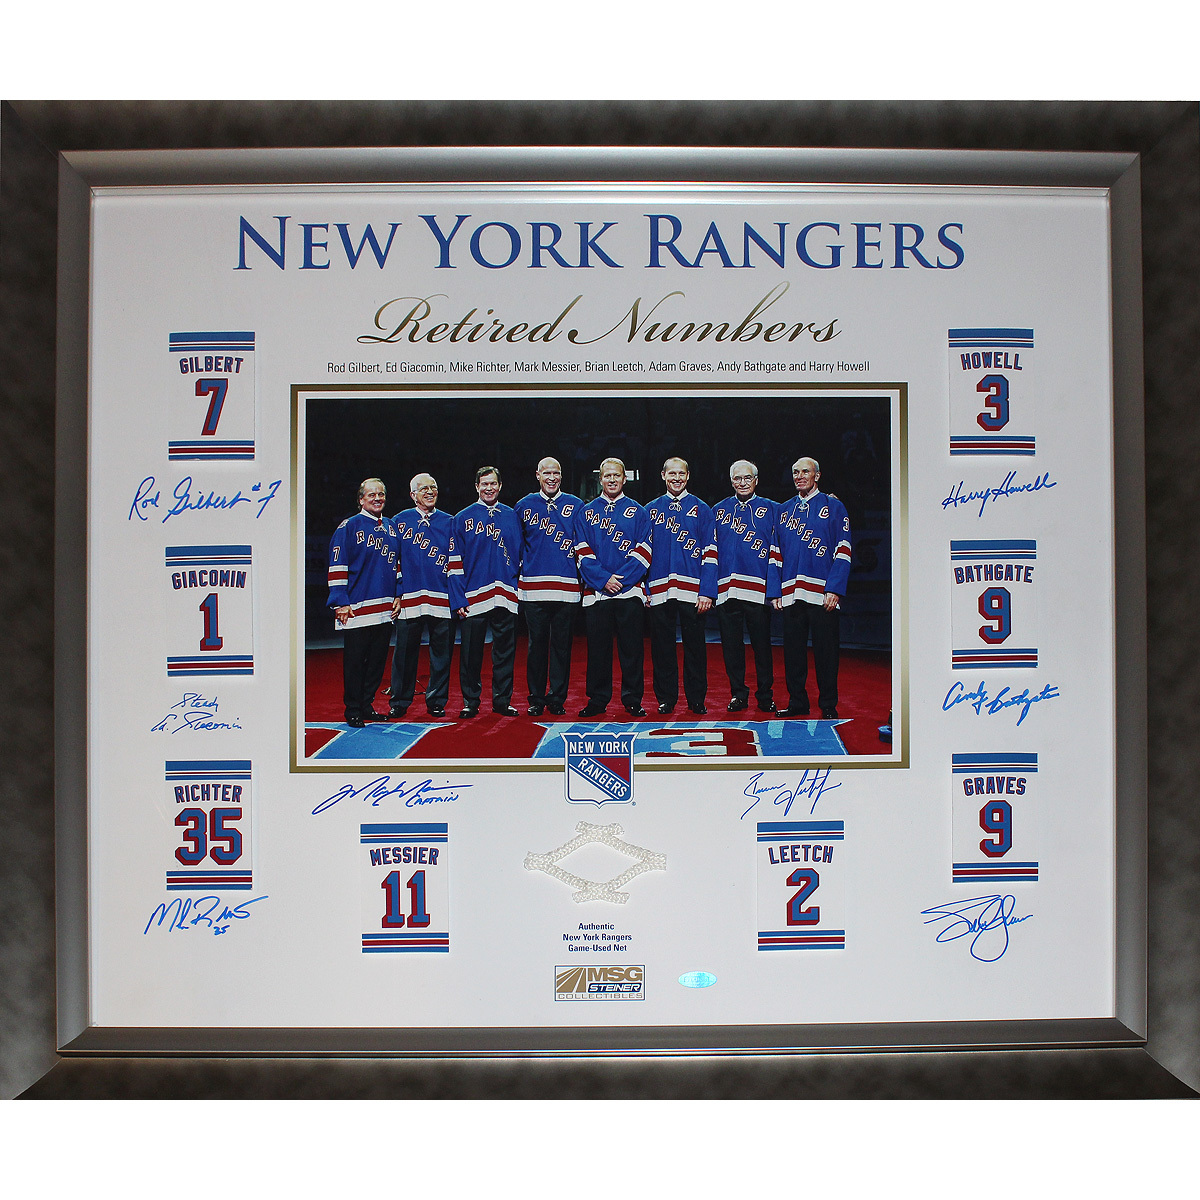 New York Rangers Retired Numbers